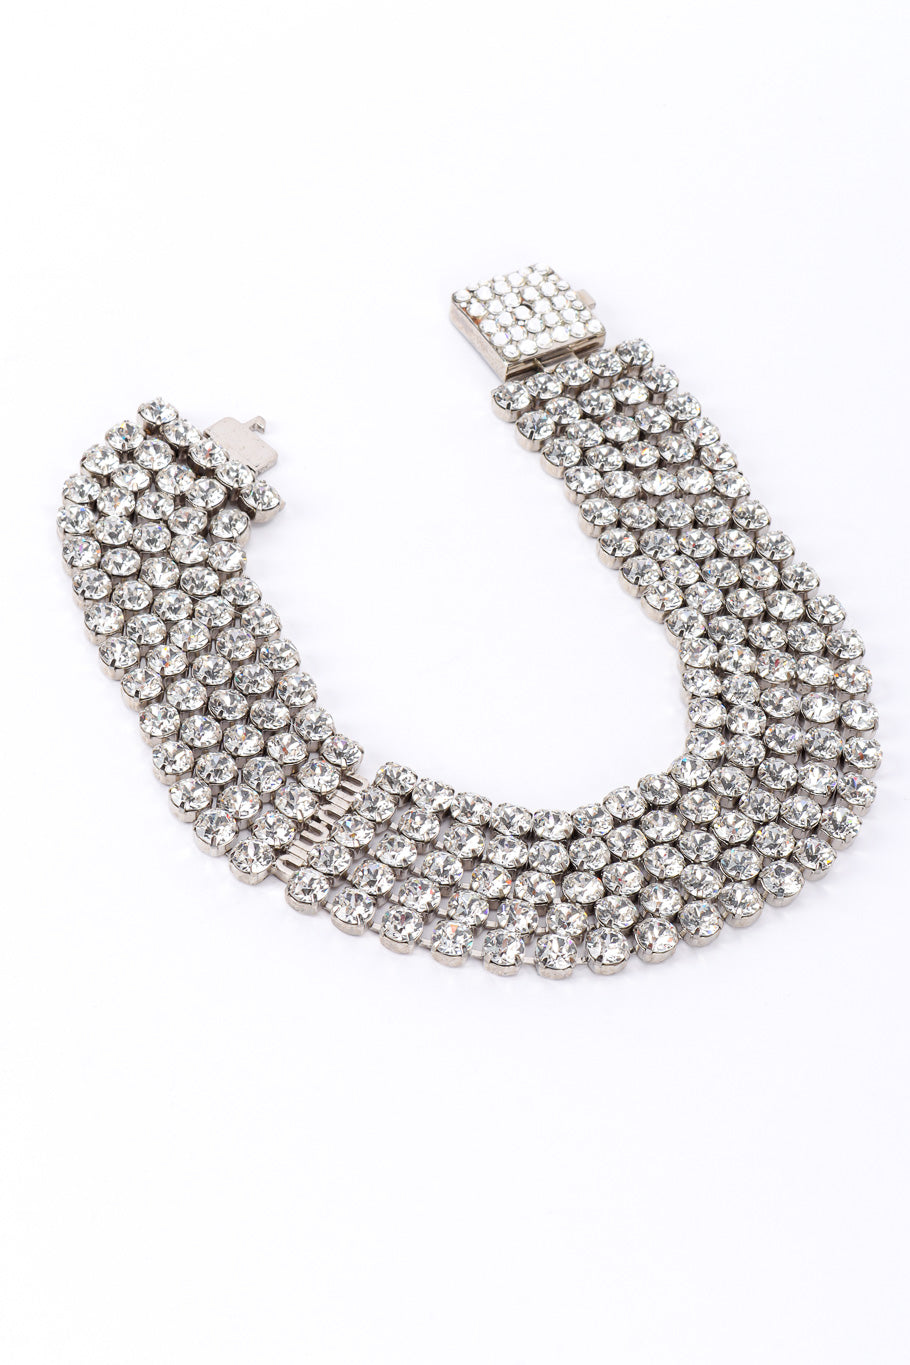 Crystal collar necklace by Miu Miu on white background @recessla